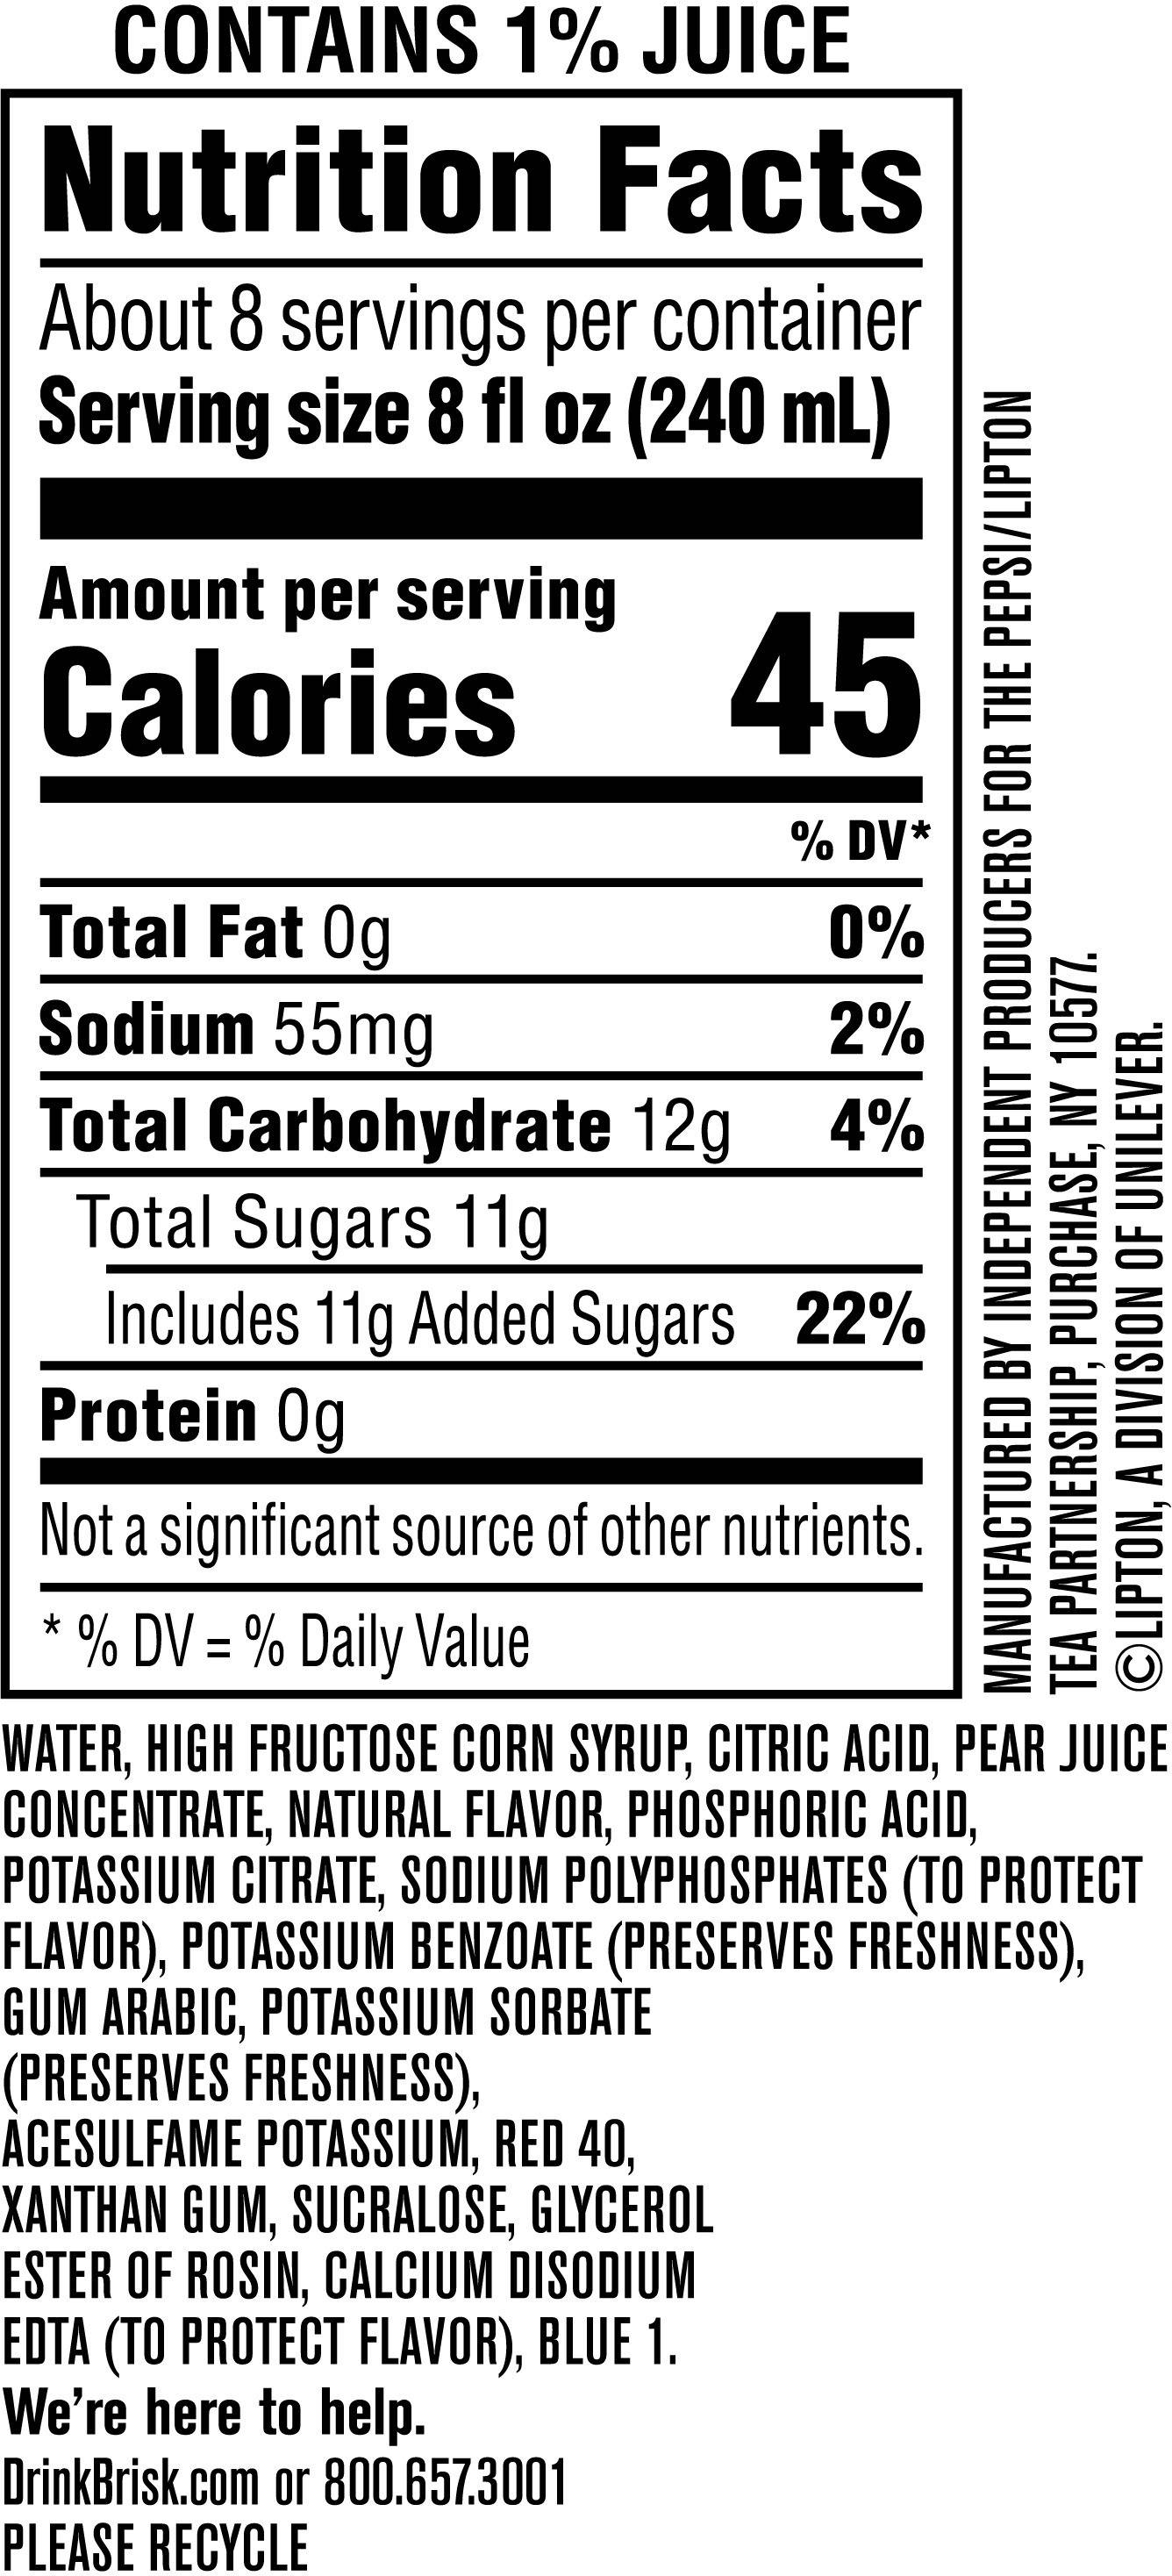 Image describing nutrition information for product Brisk Fruit Punch